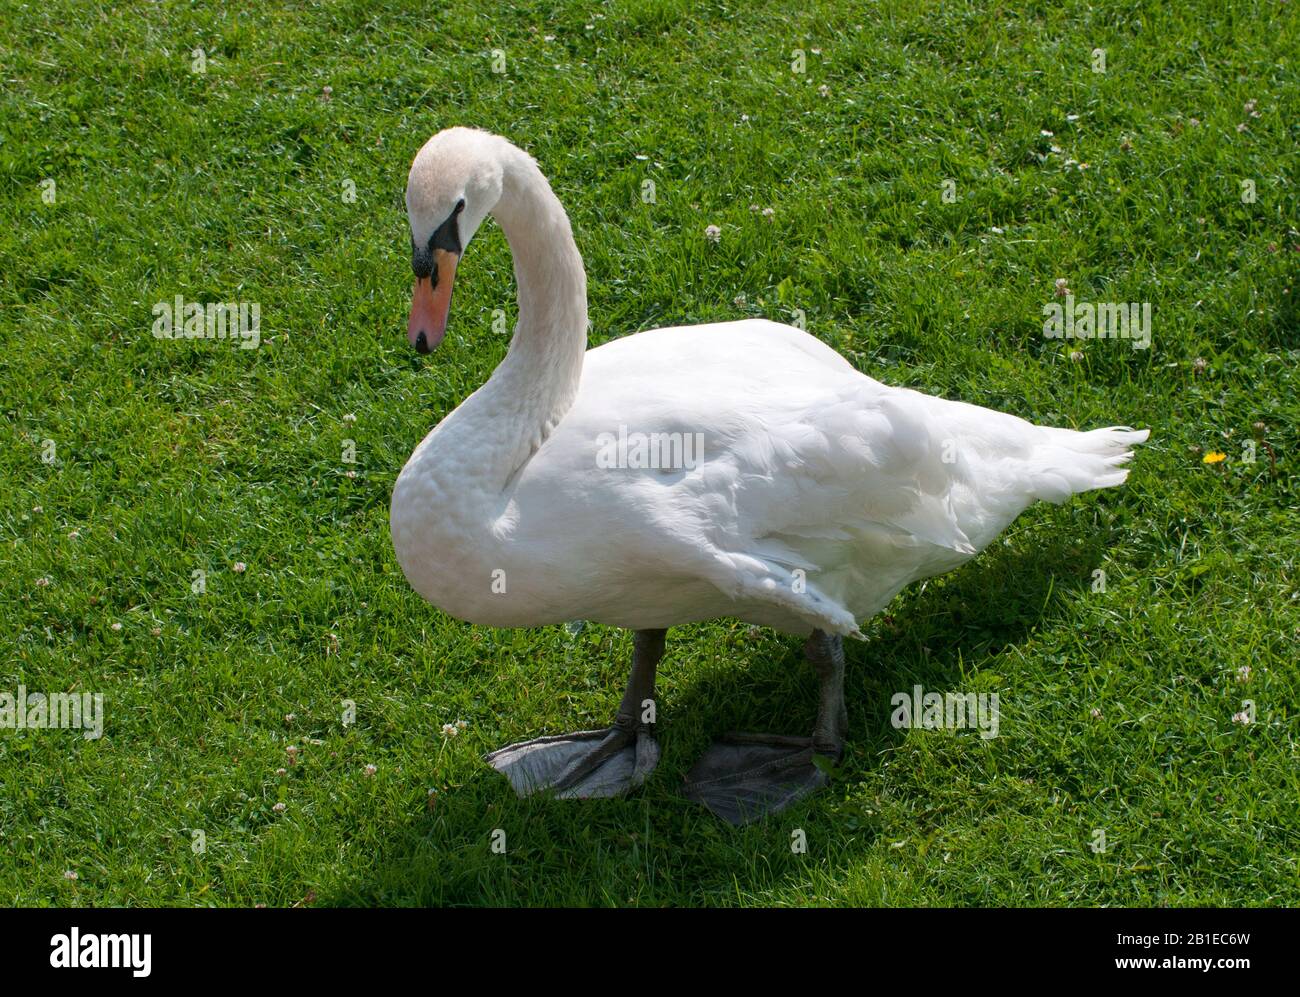 Mute swan (Cygnus olor) on a lawn Stock Photo